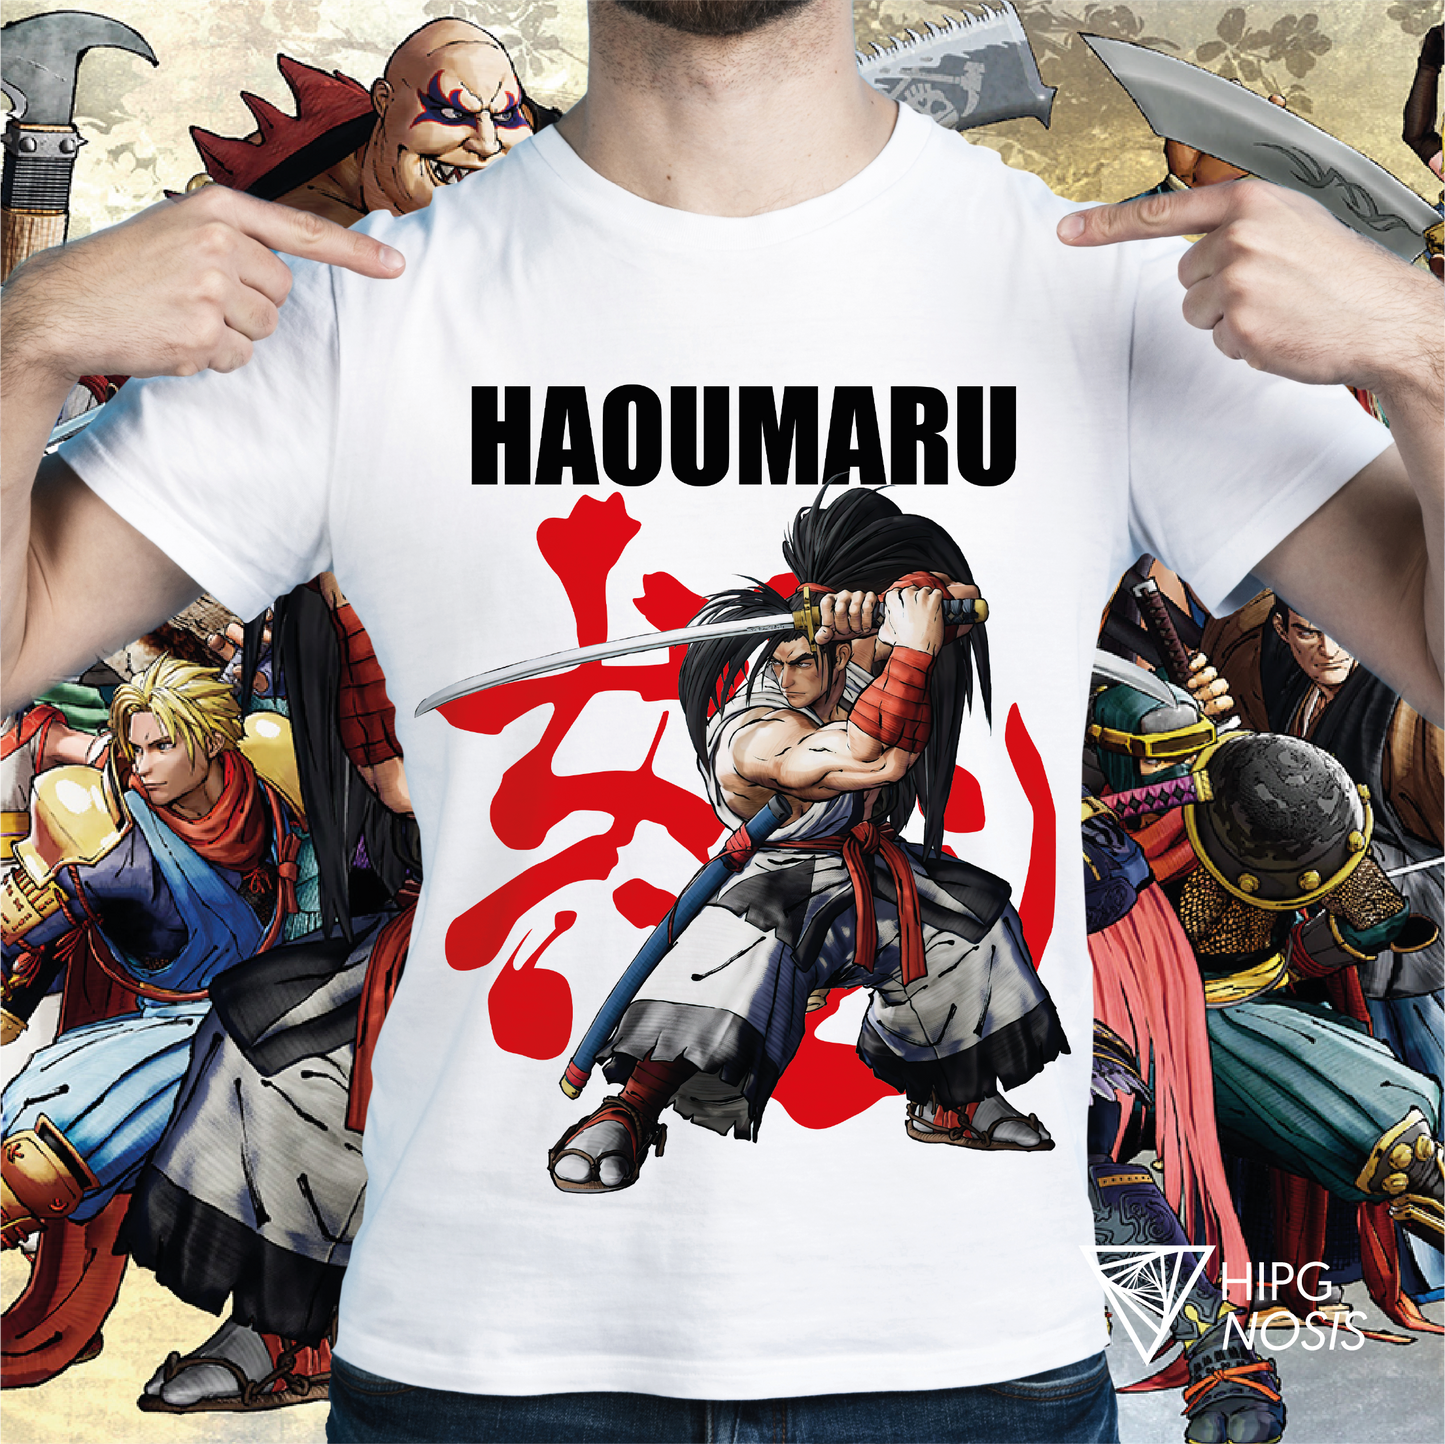 Samurai Shodow Haoumaru 01 - Hipgnosis